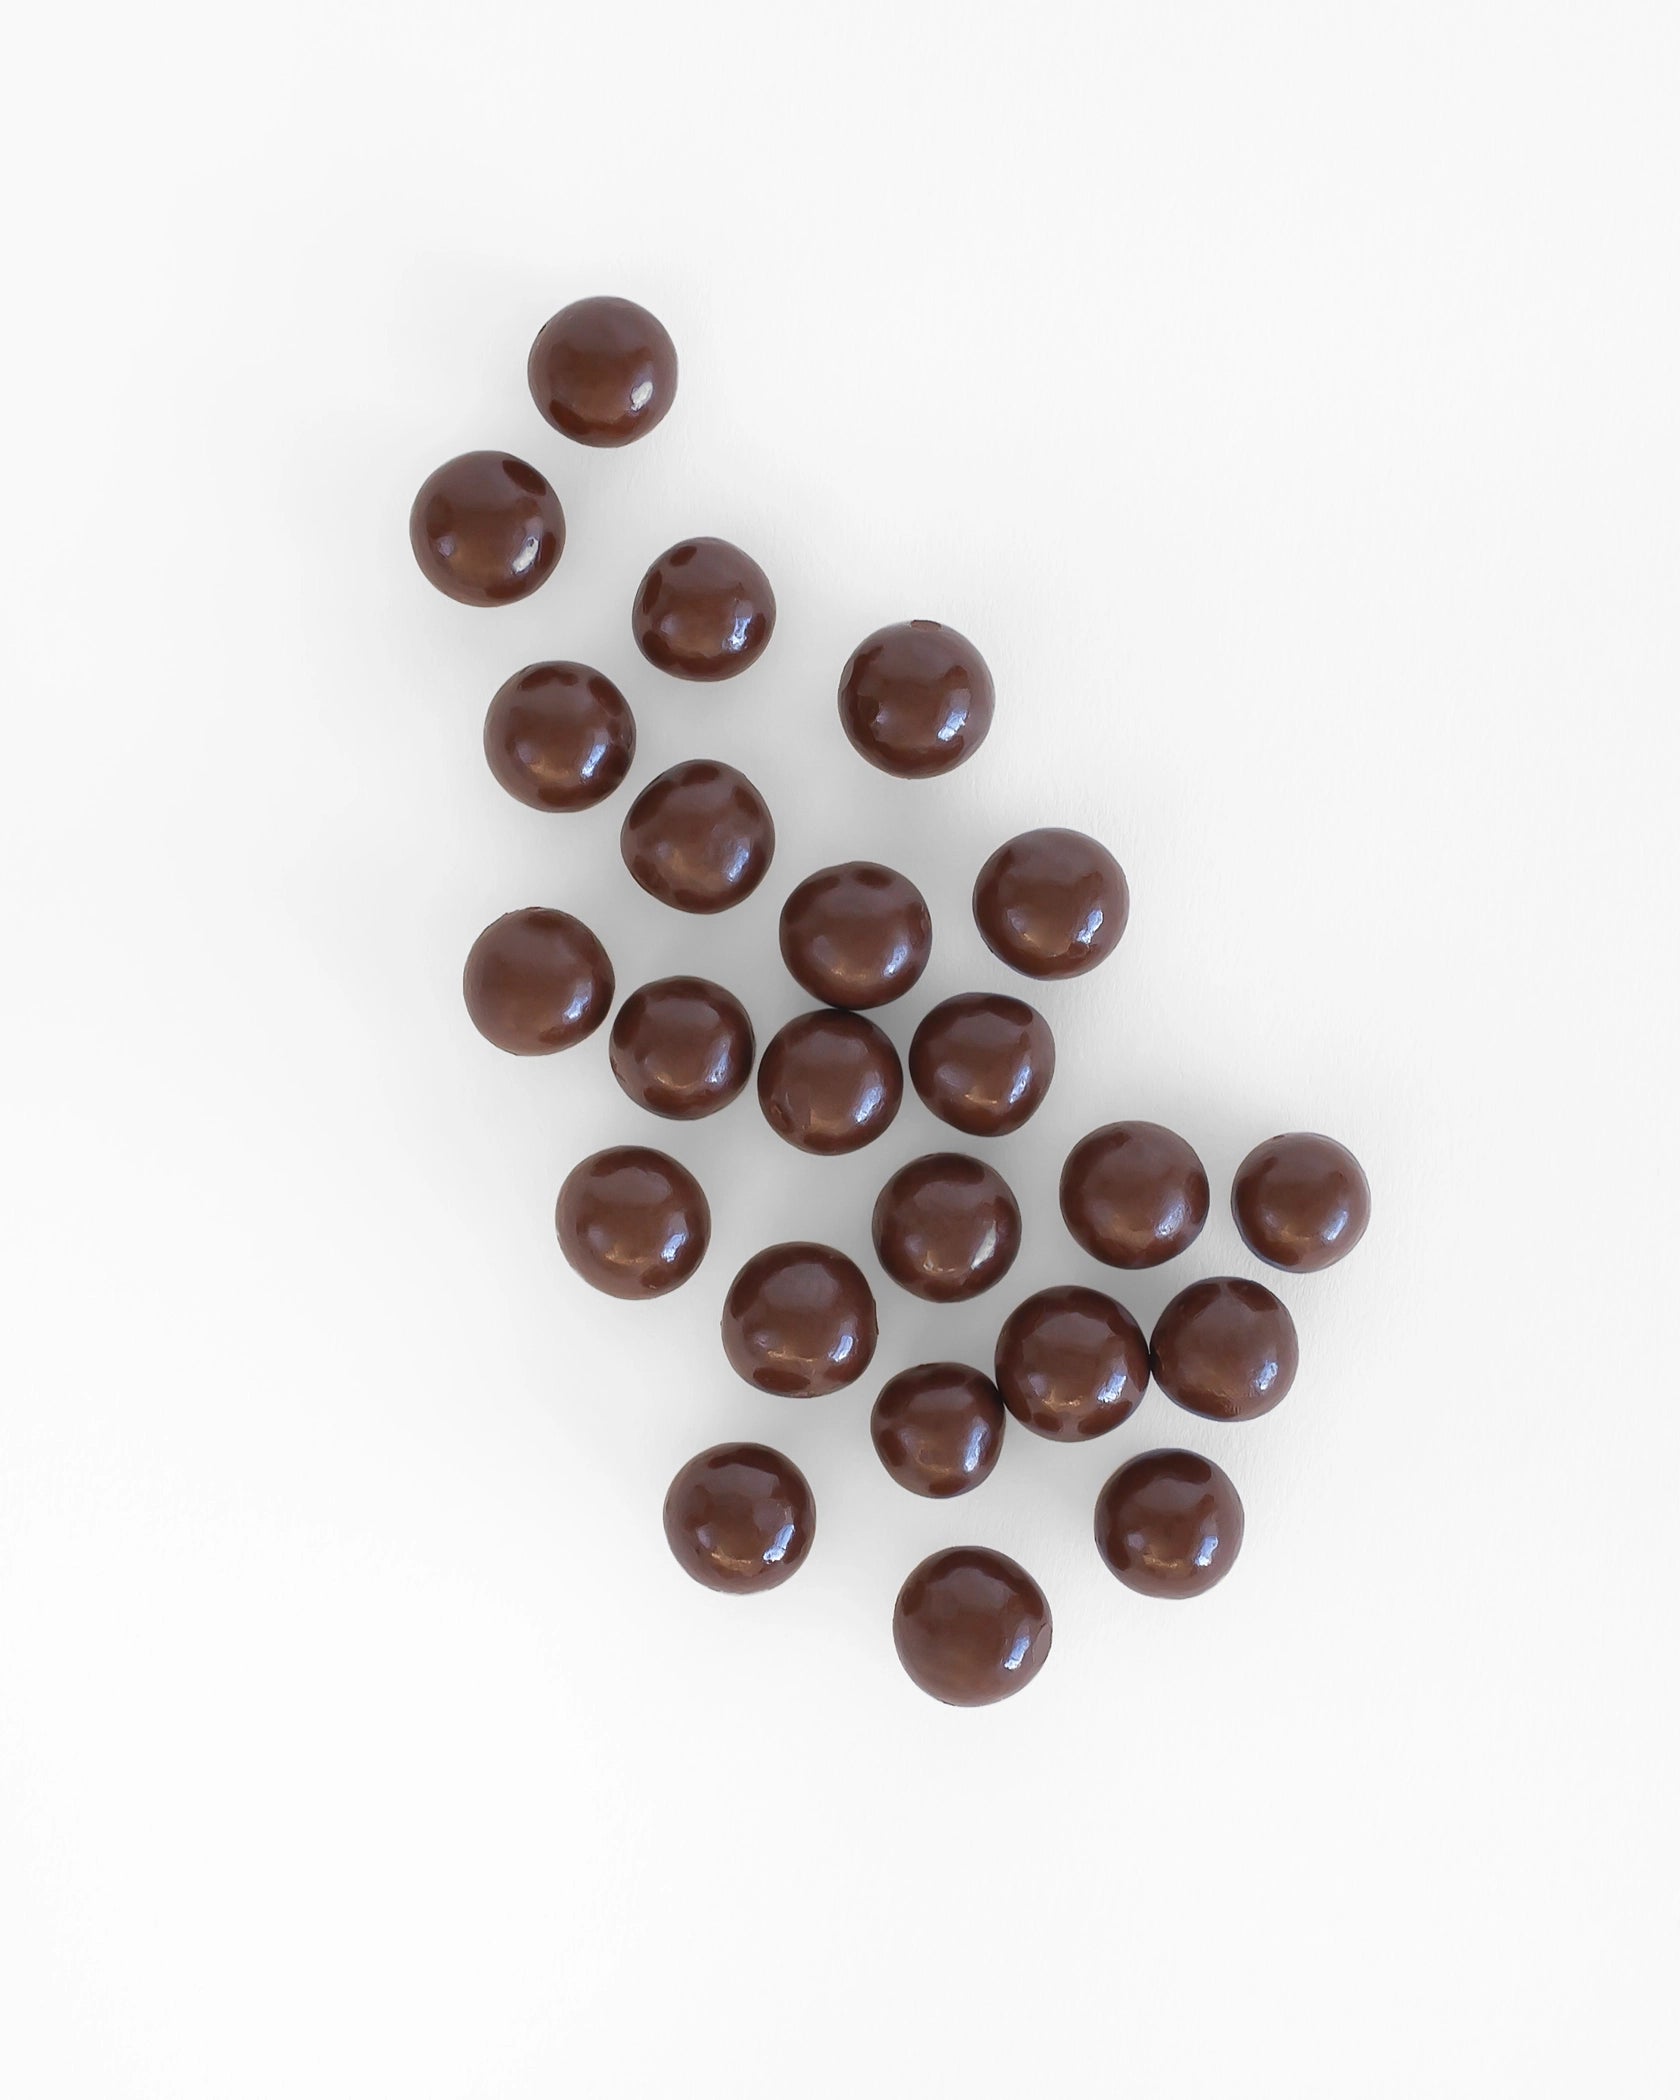 Dark Chocolate Sea Salt Caramels by Sugarfina